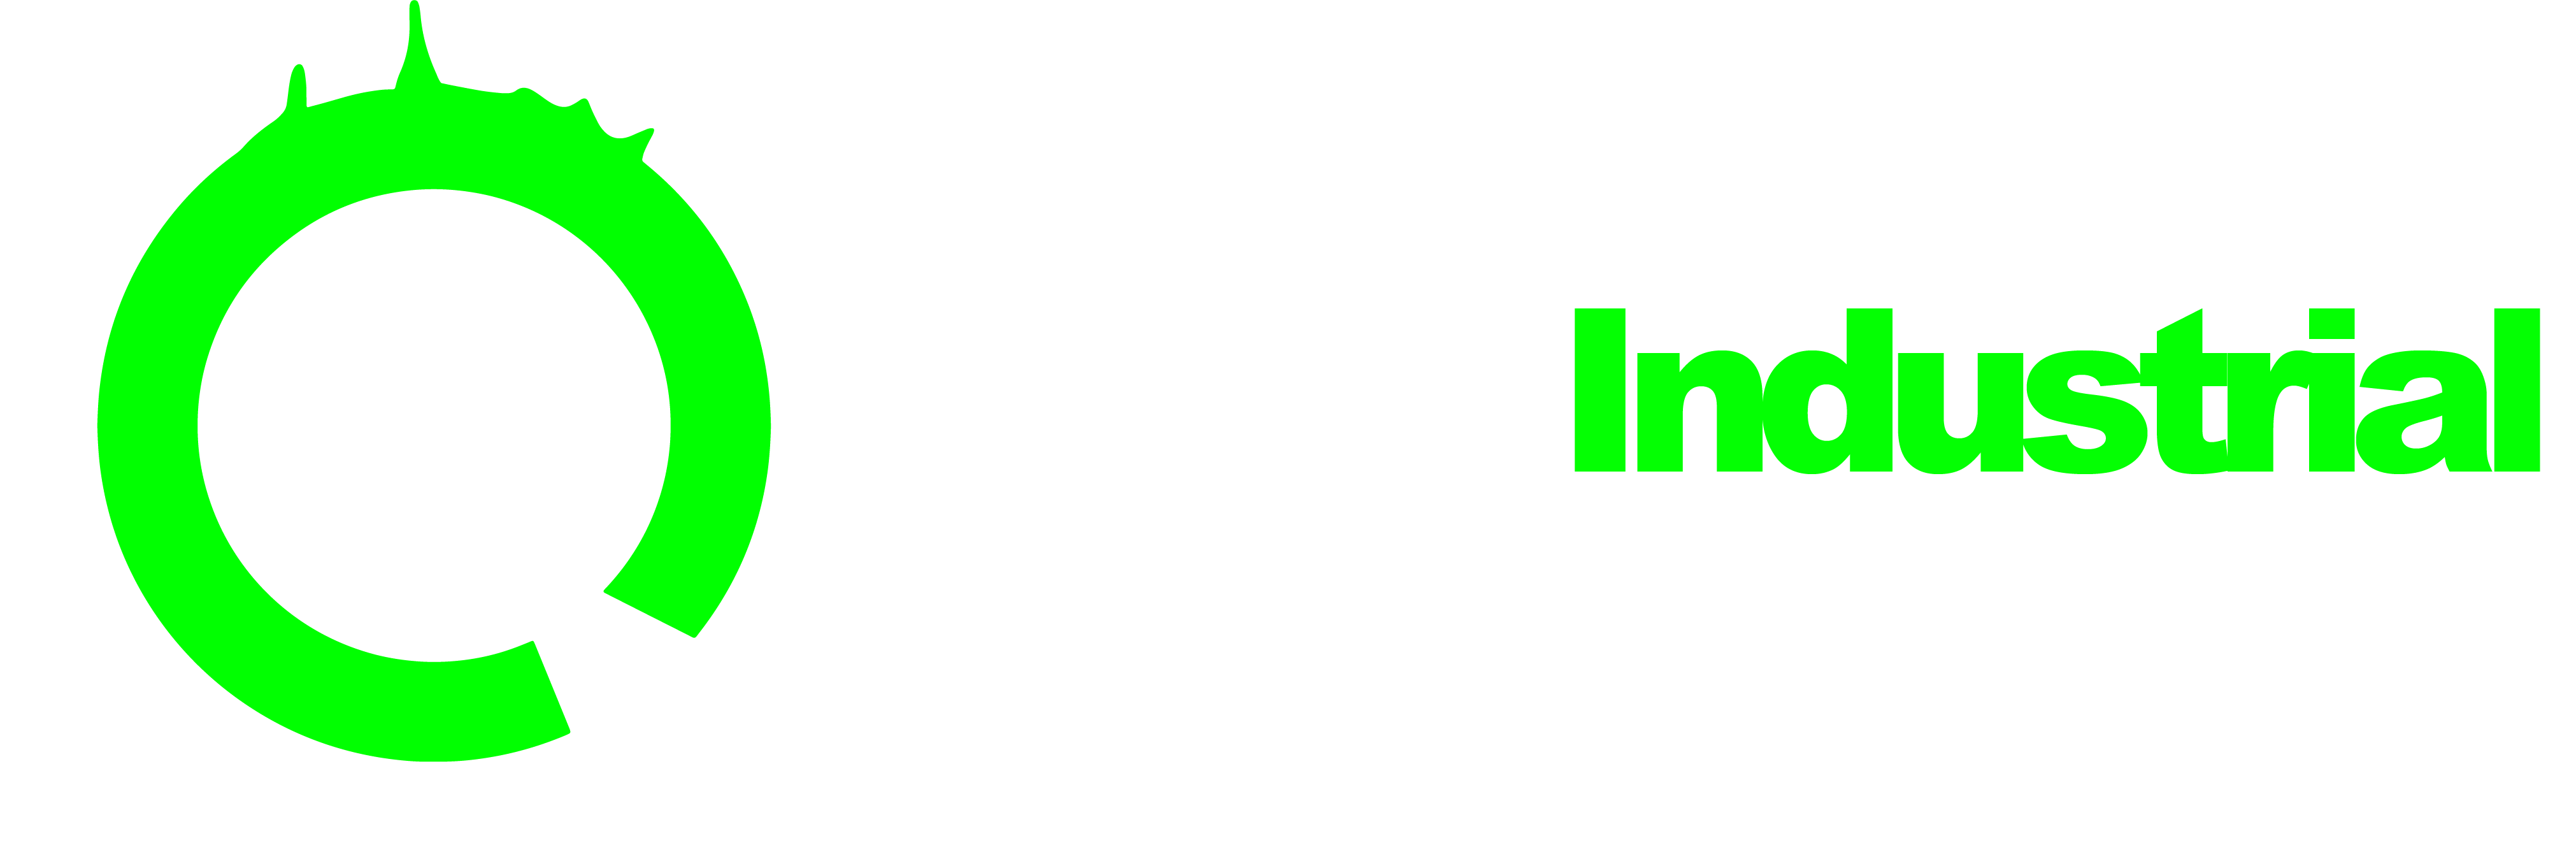 Rochadis